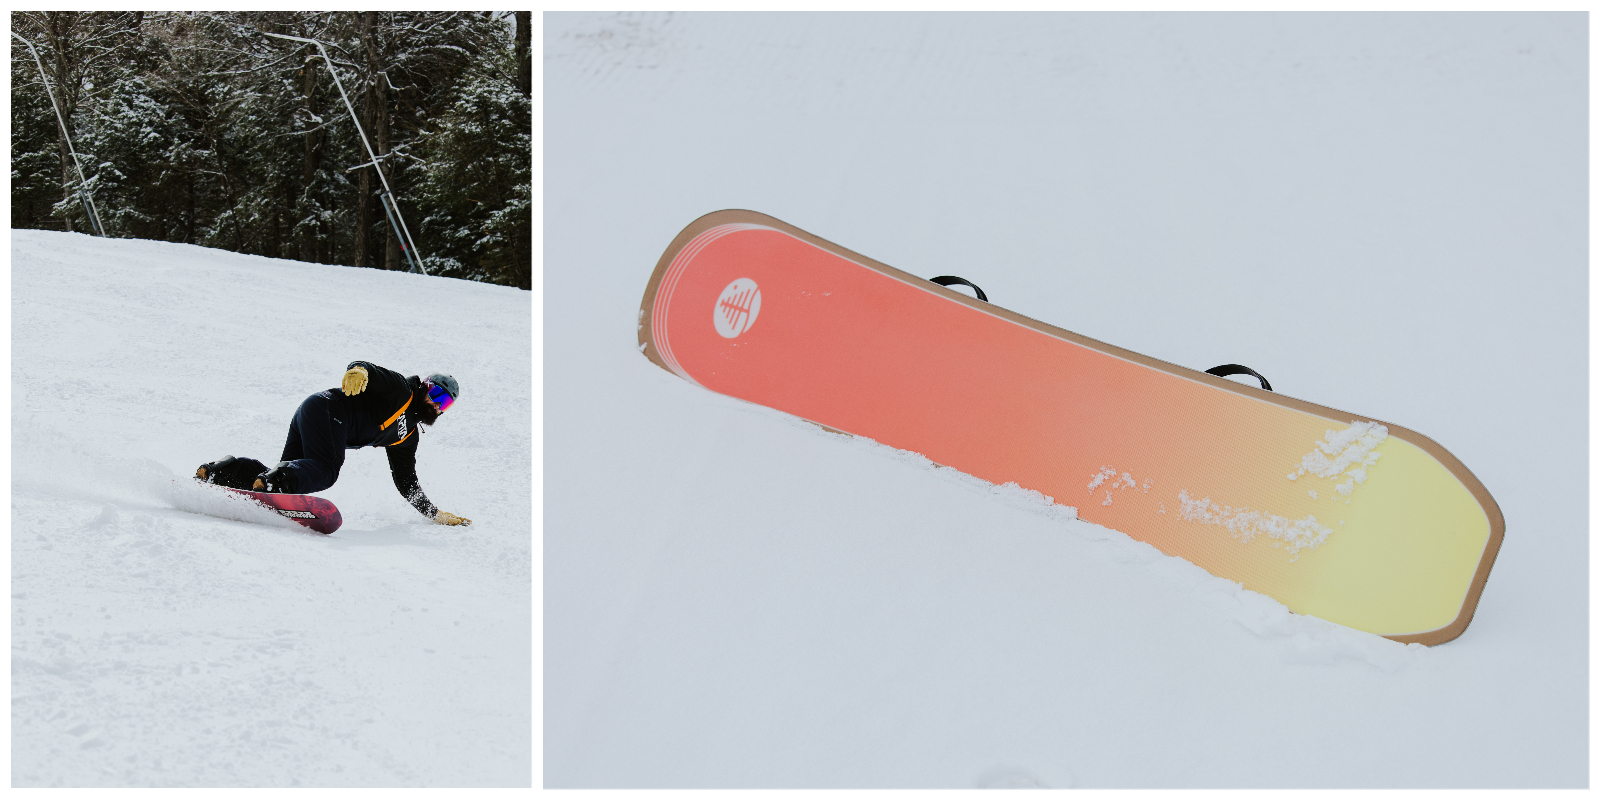 TSM, The Ski Monster, skiing, snowboarding, snowboards, Burton, Sunapee, New Hampshire, gear test, winter, snow 